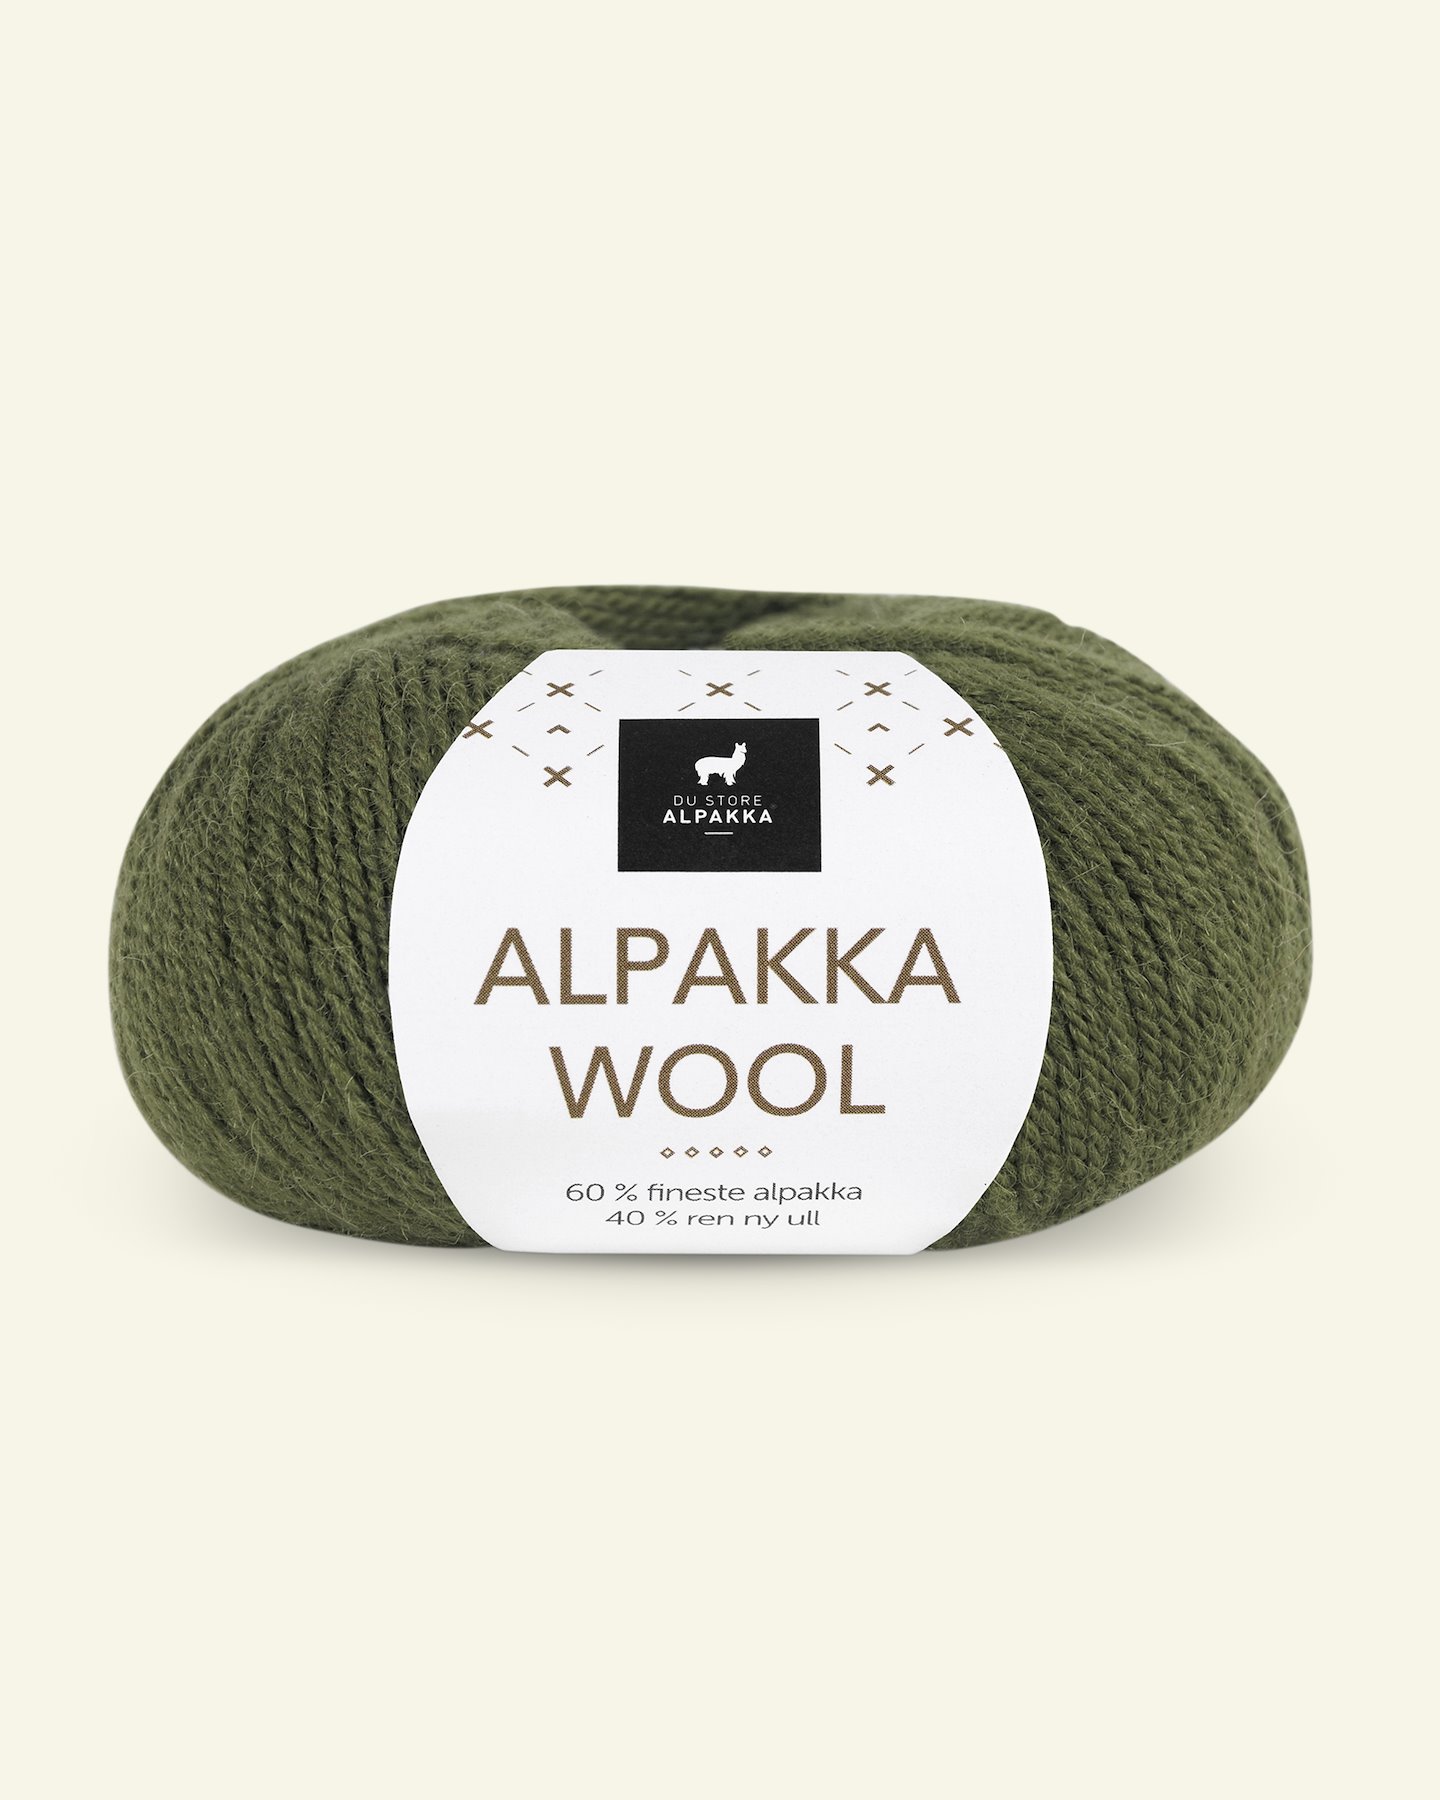 Du Store Alpakka, Alpakka ullgarn "Alpakka Wool", oliven (522) 90000557_pack